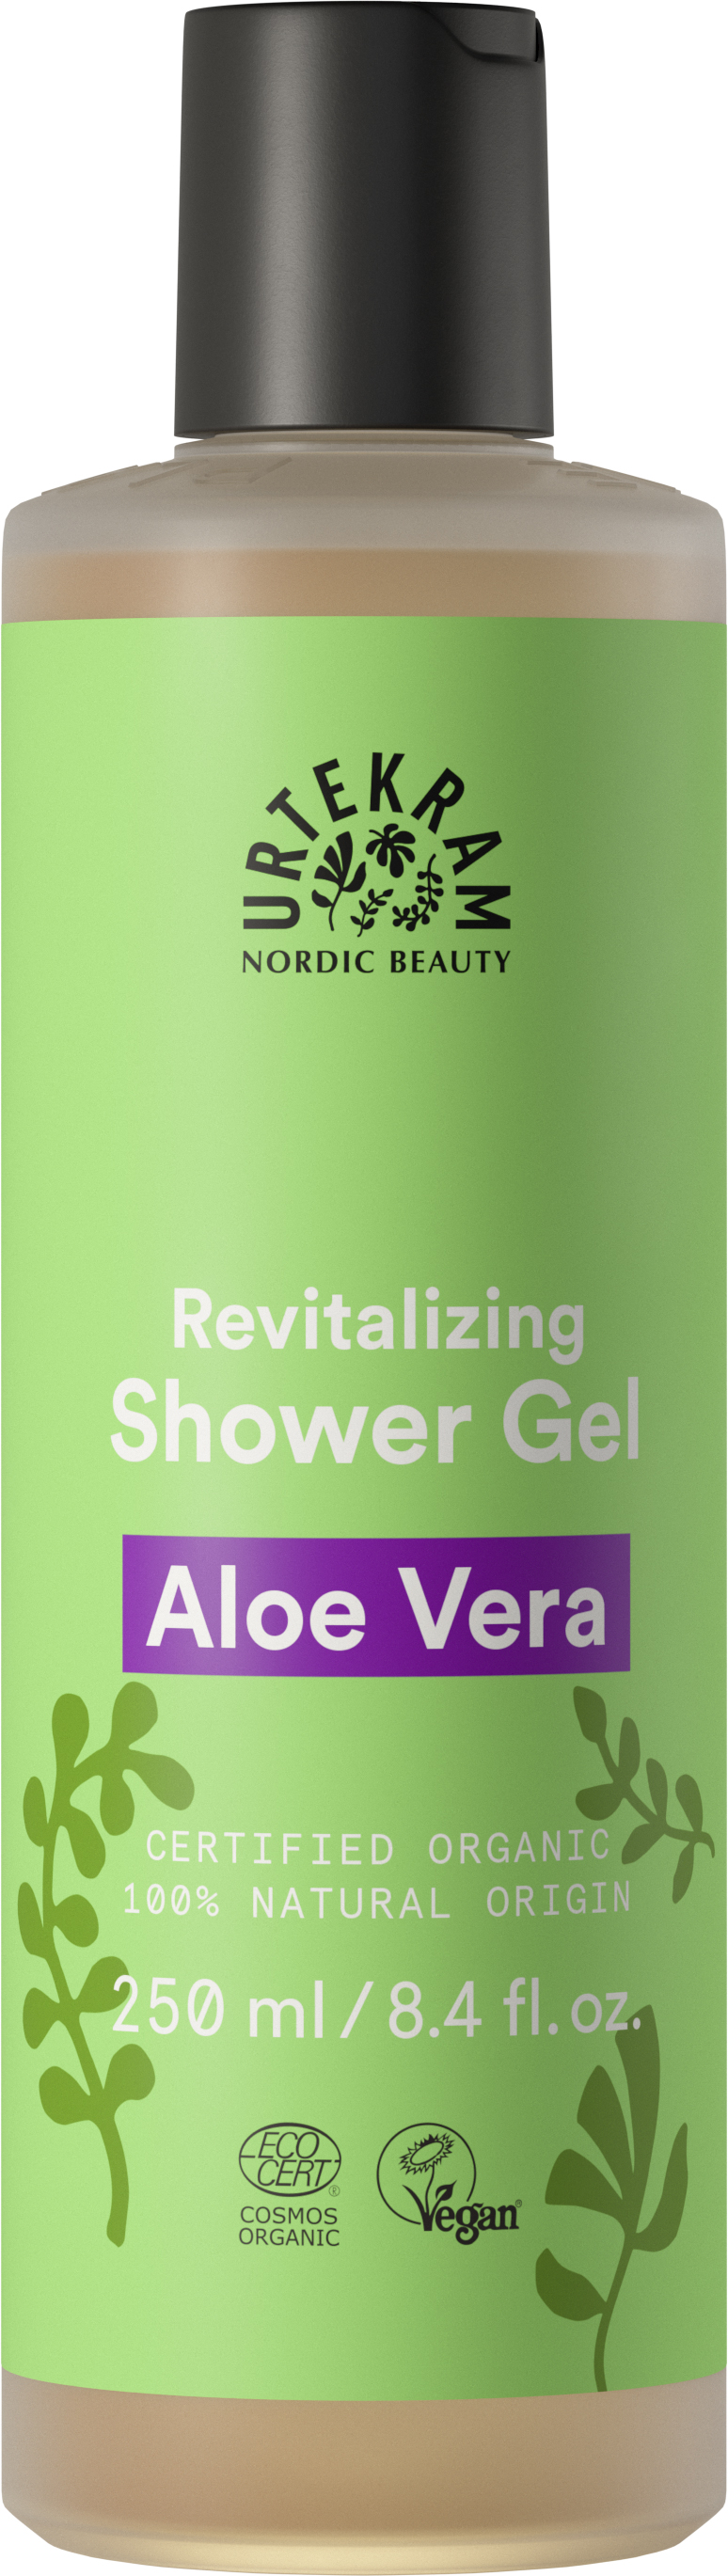 Aloe Vera Shower Gel 250 ml - Urtekram